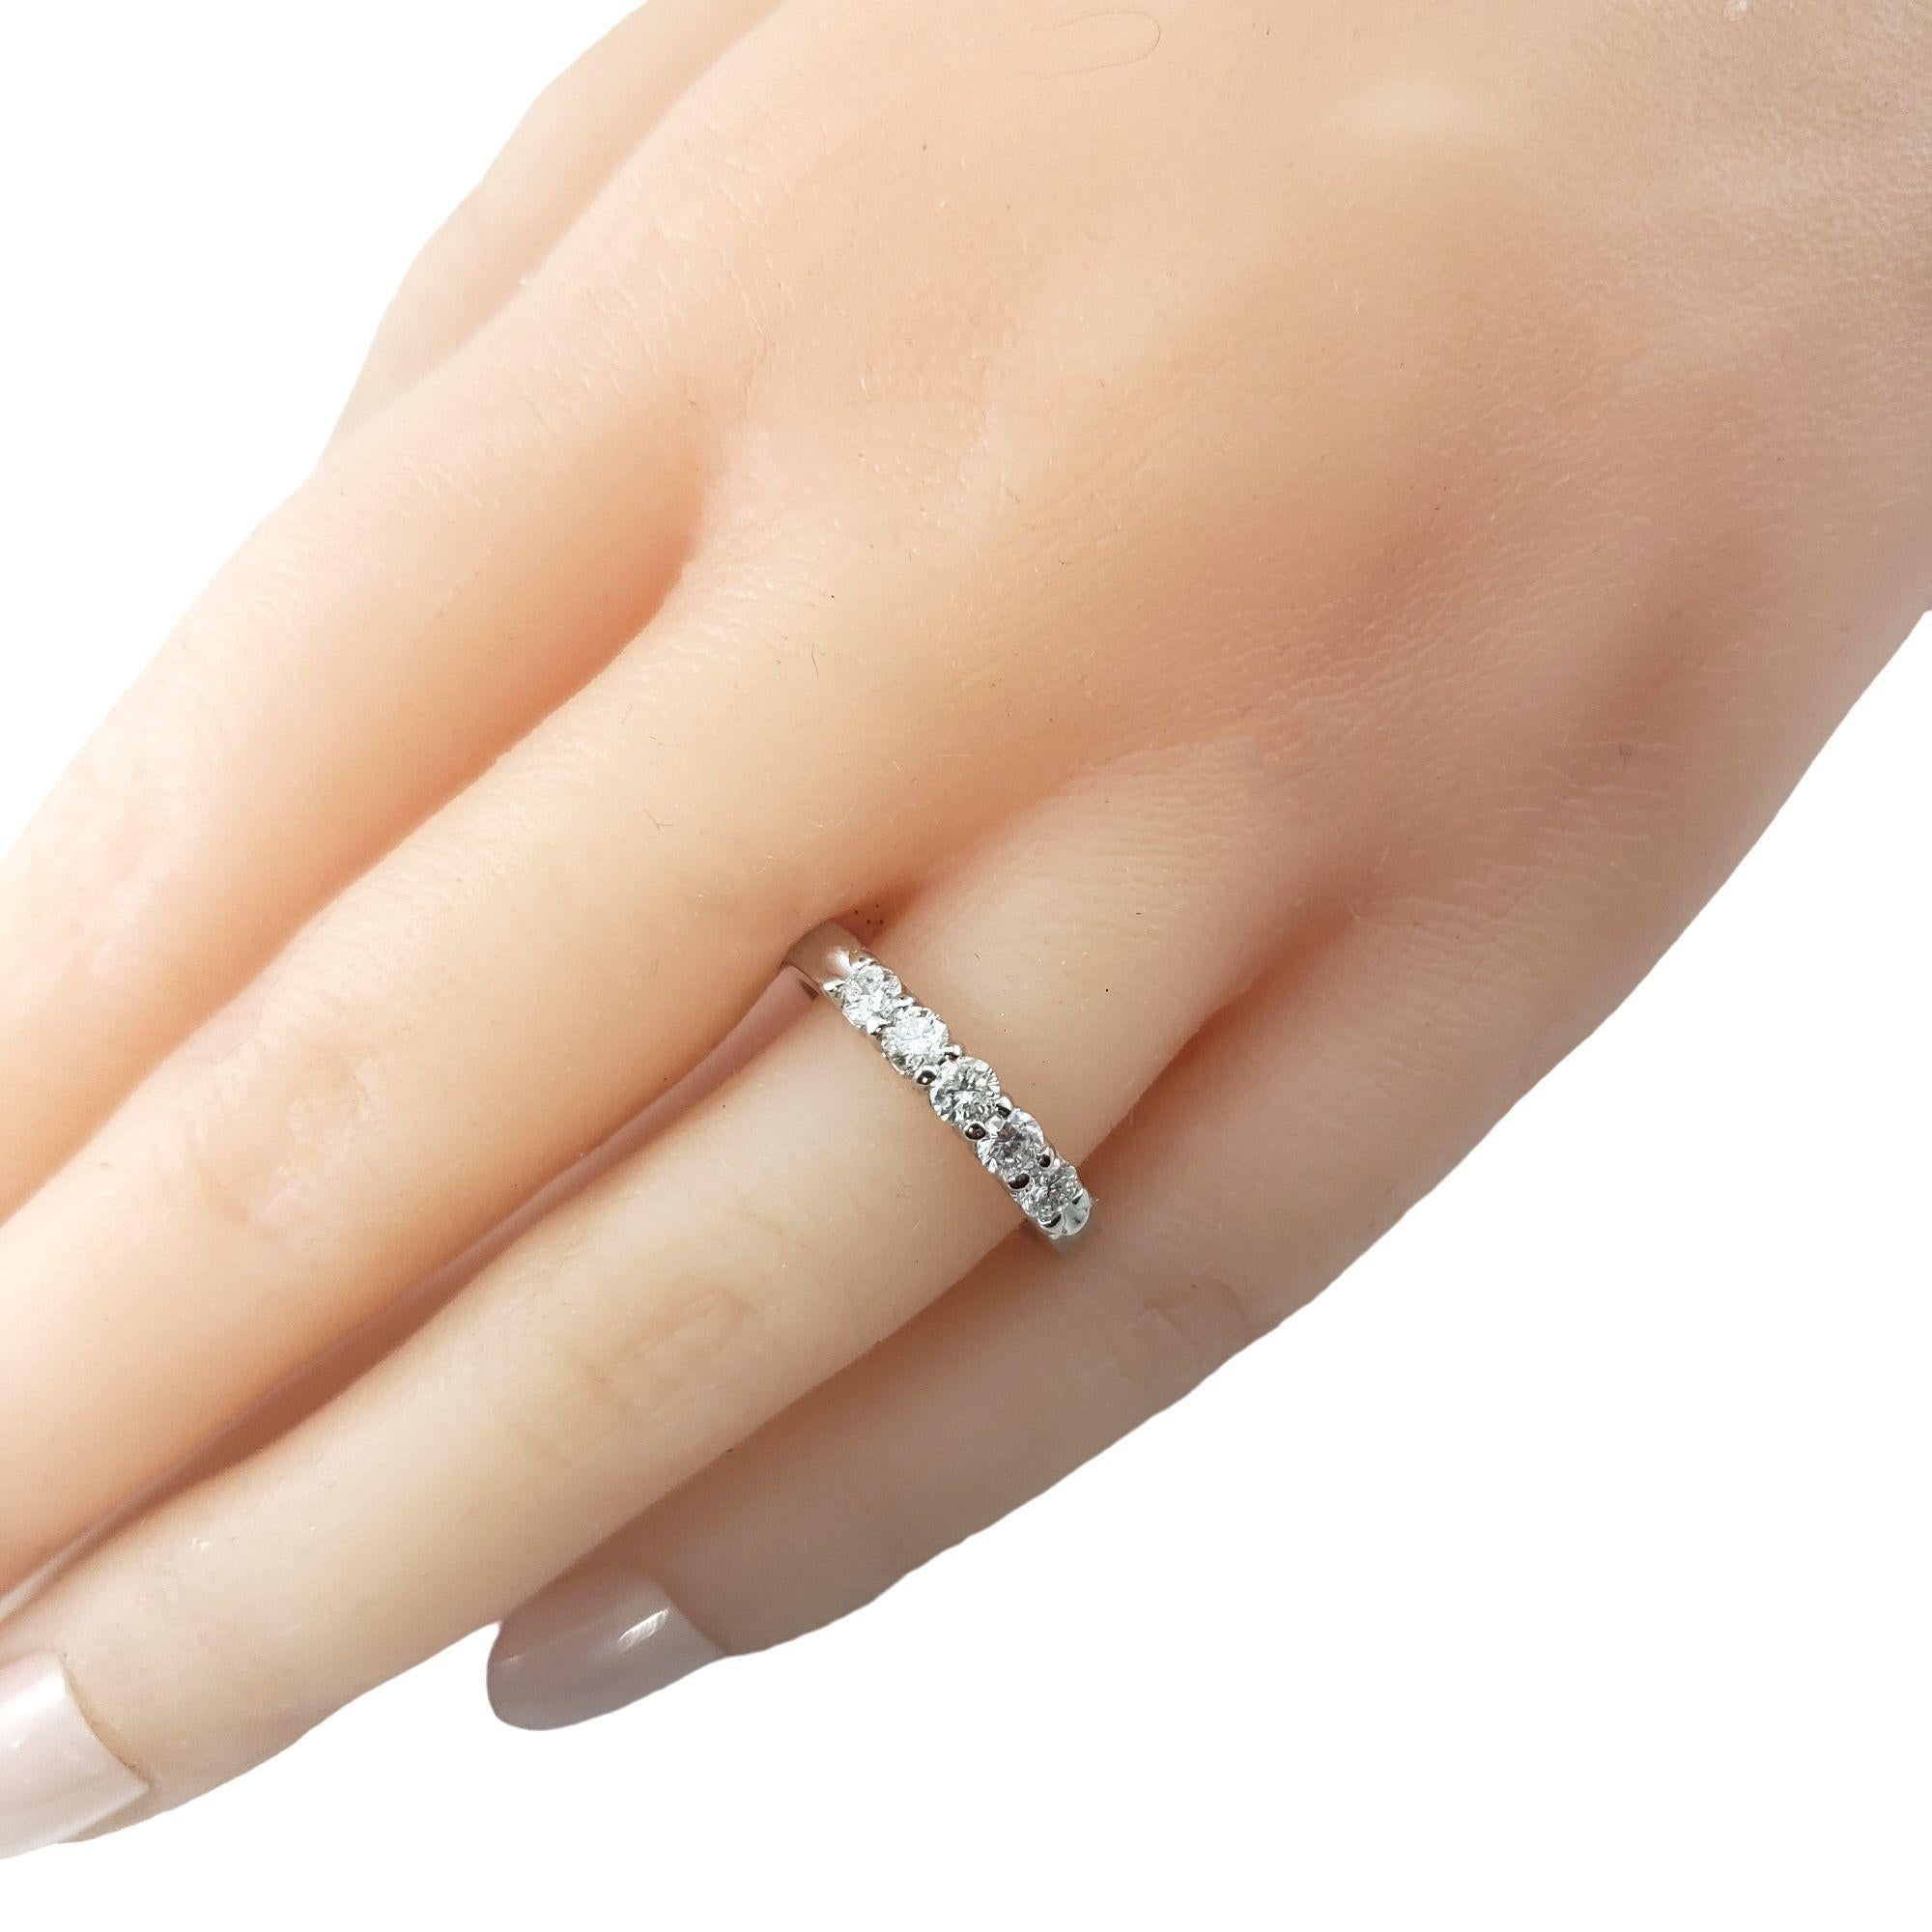  Platinum and Diamond Wedding Band Ring Size 4.75 #15067 3